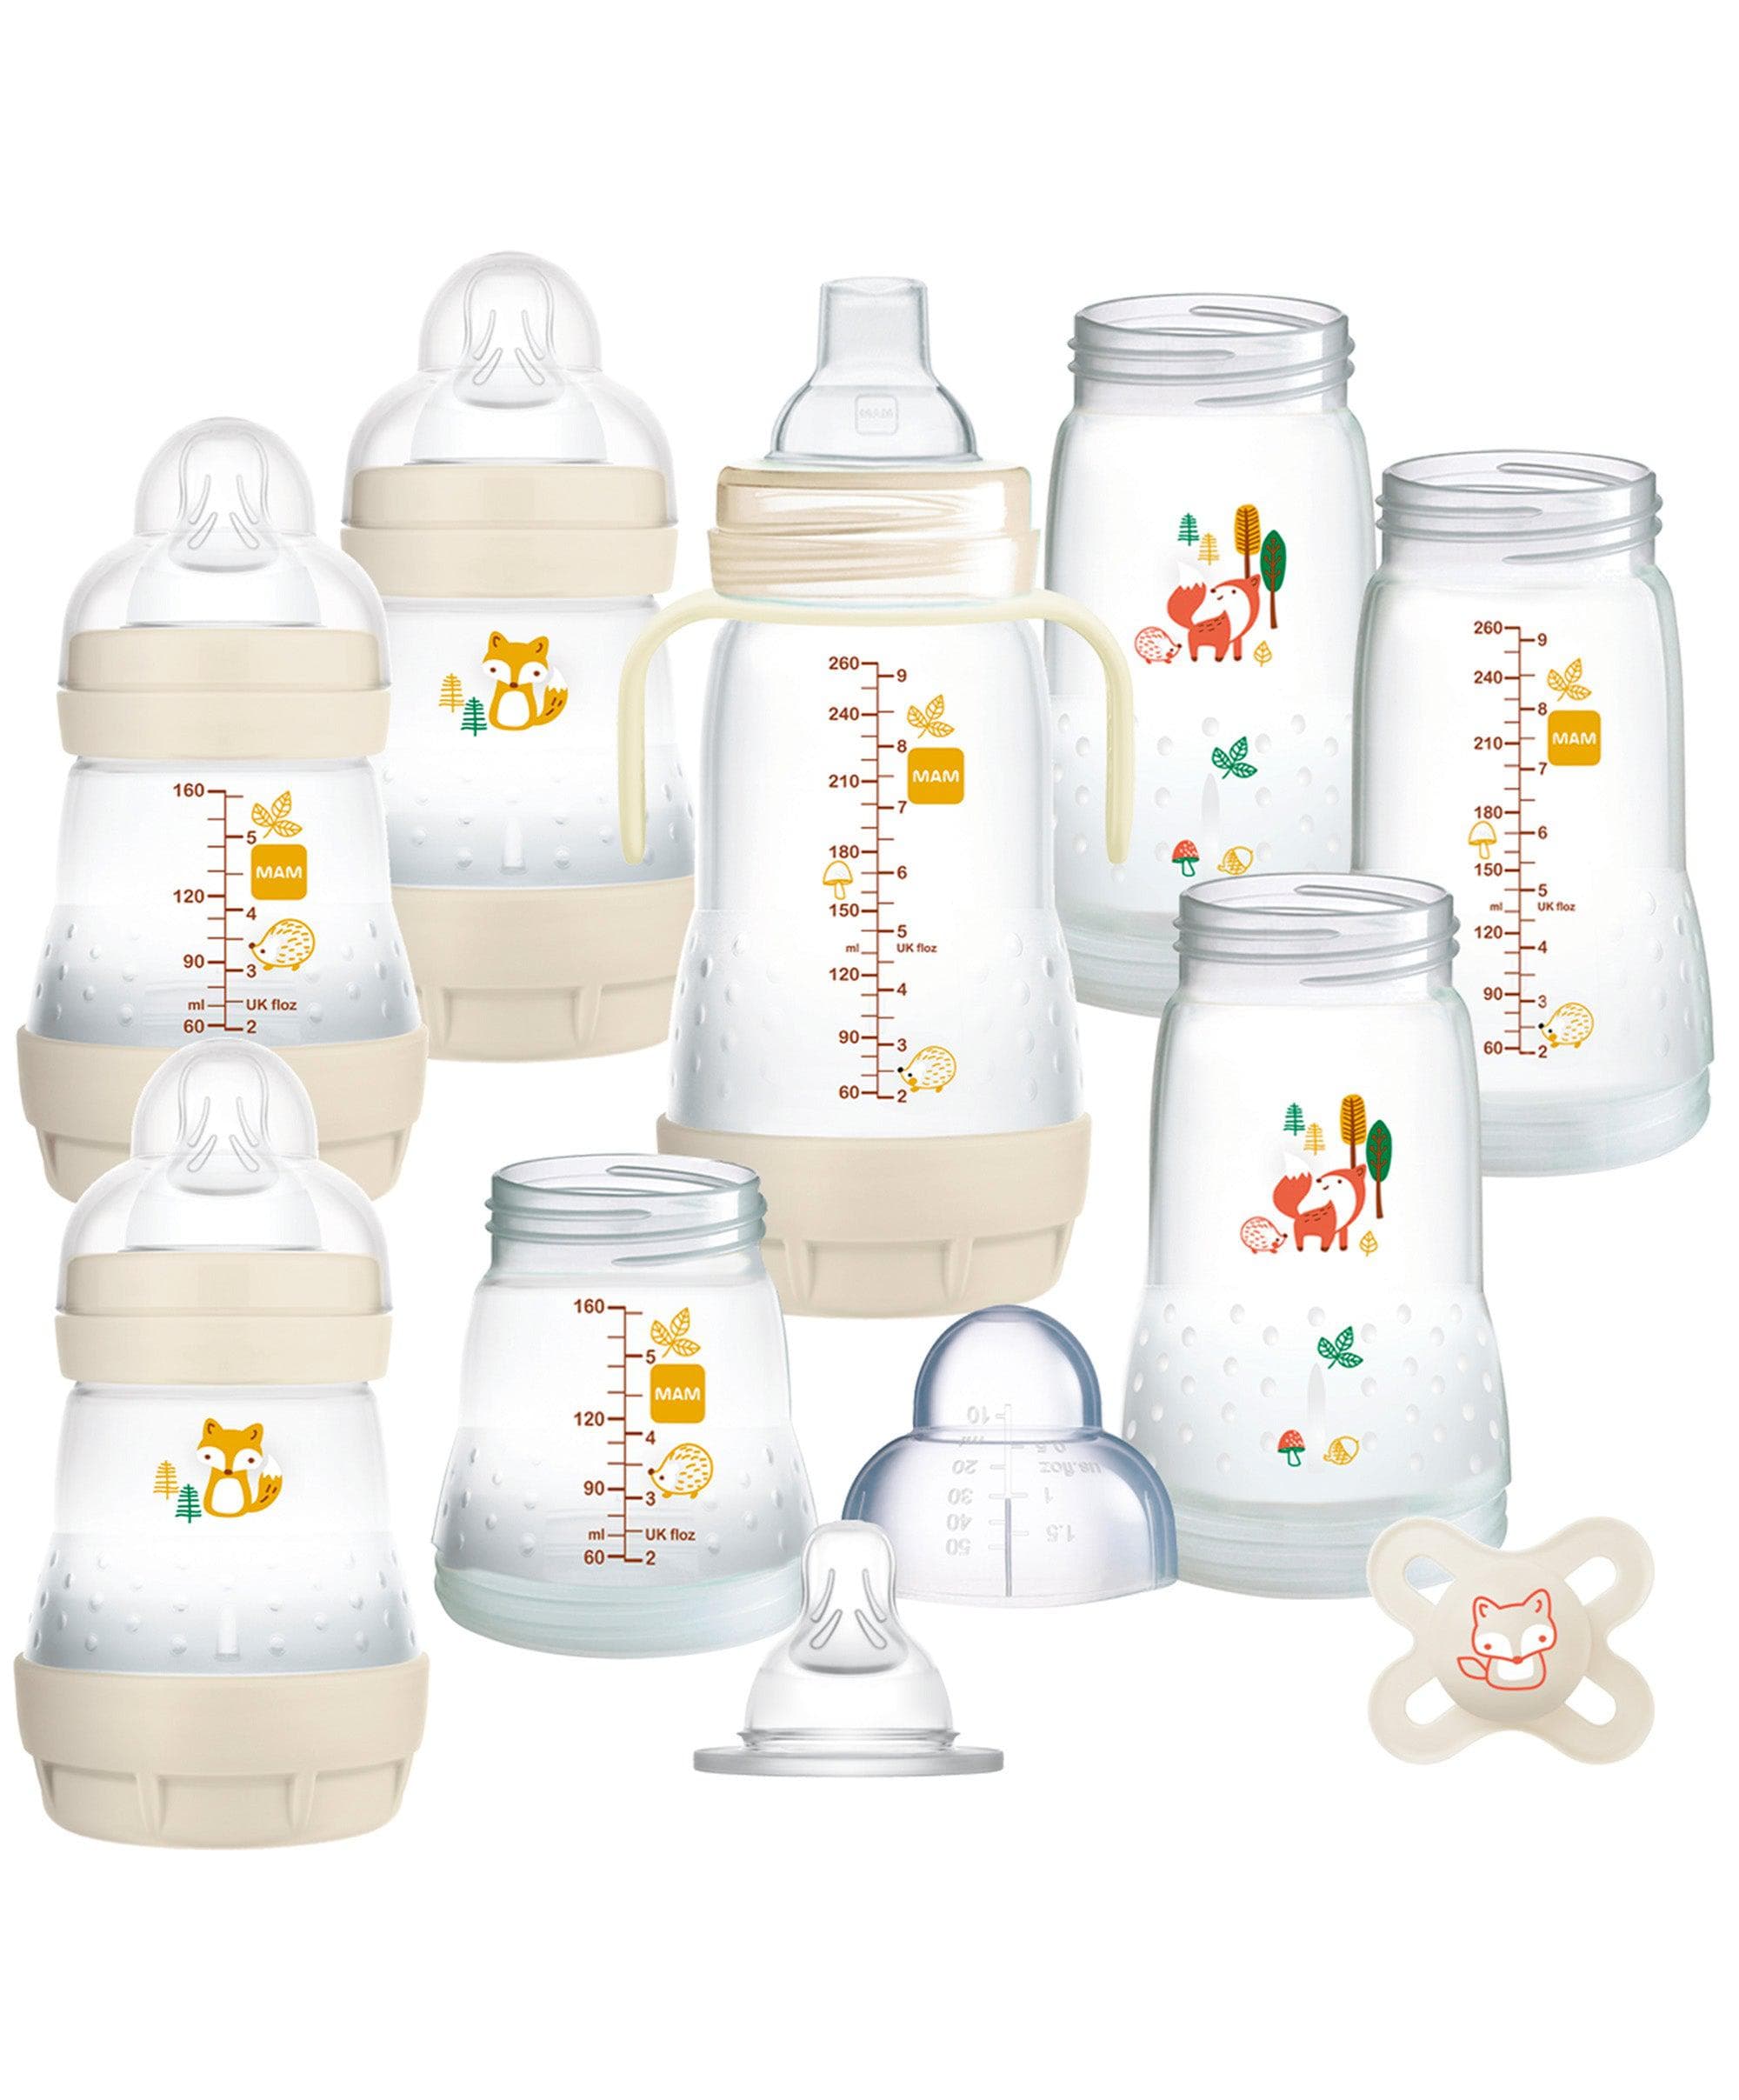 MAM Baby Easy Start Anti-Colic Self Sterilising Newborn Bottles & Soother 11 Piece Set - Ivory White